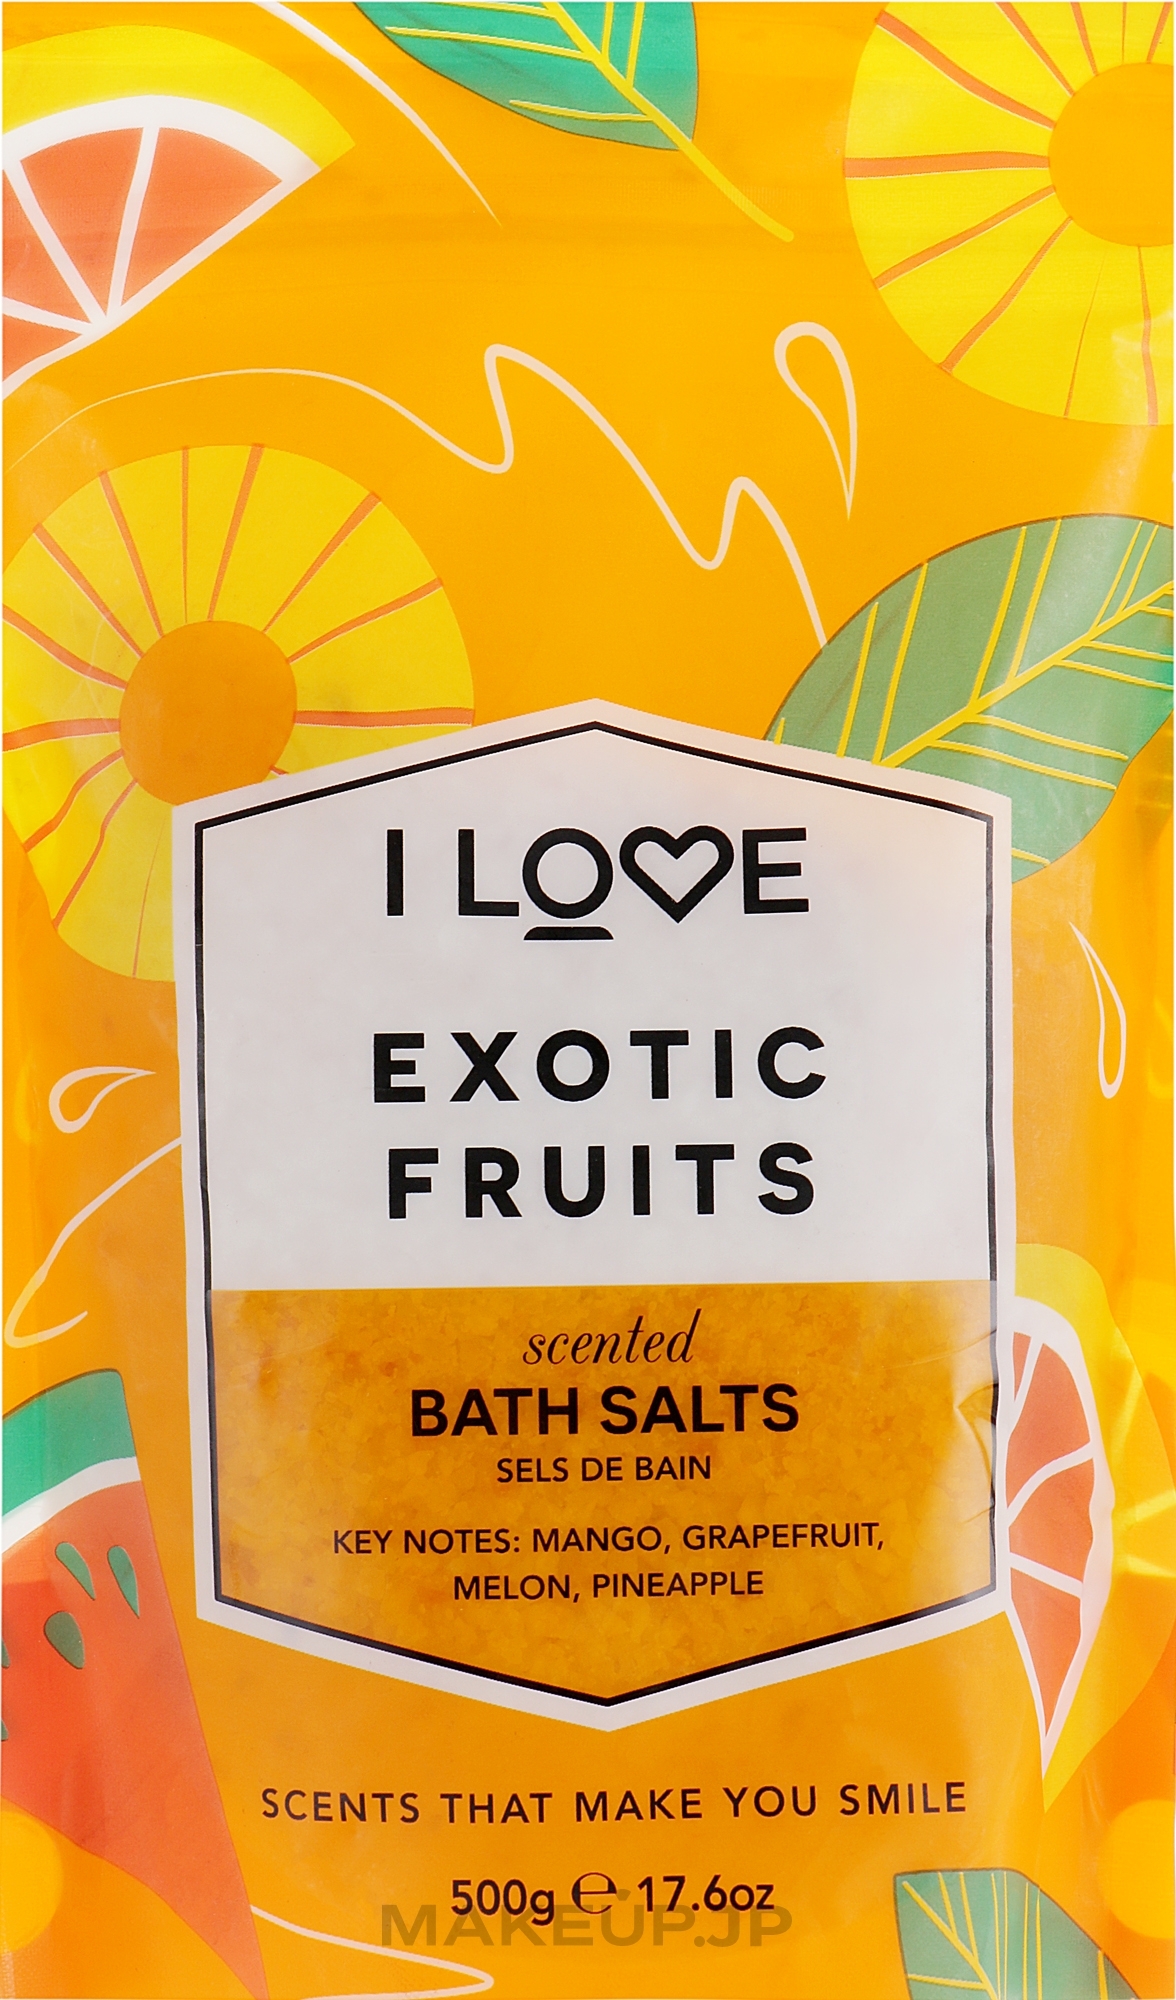 Exotic Fruits Bath Salt - I Love Exotic Fruits Bath Salt — photo 500 g